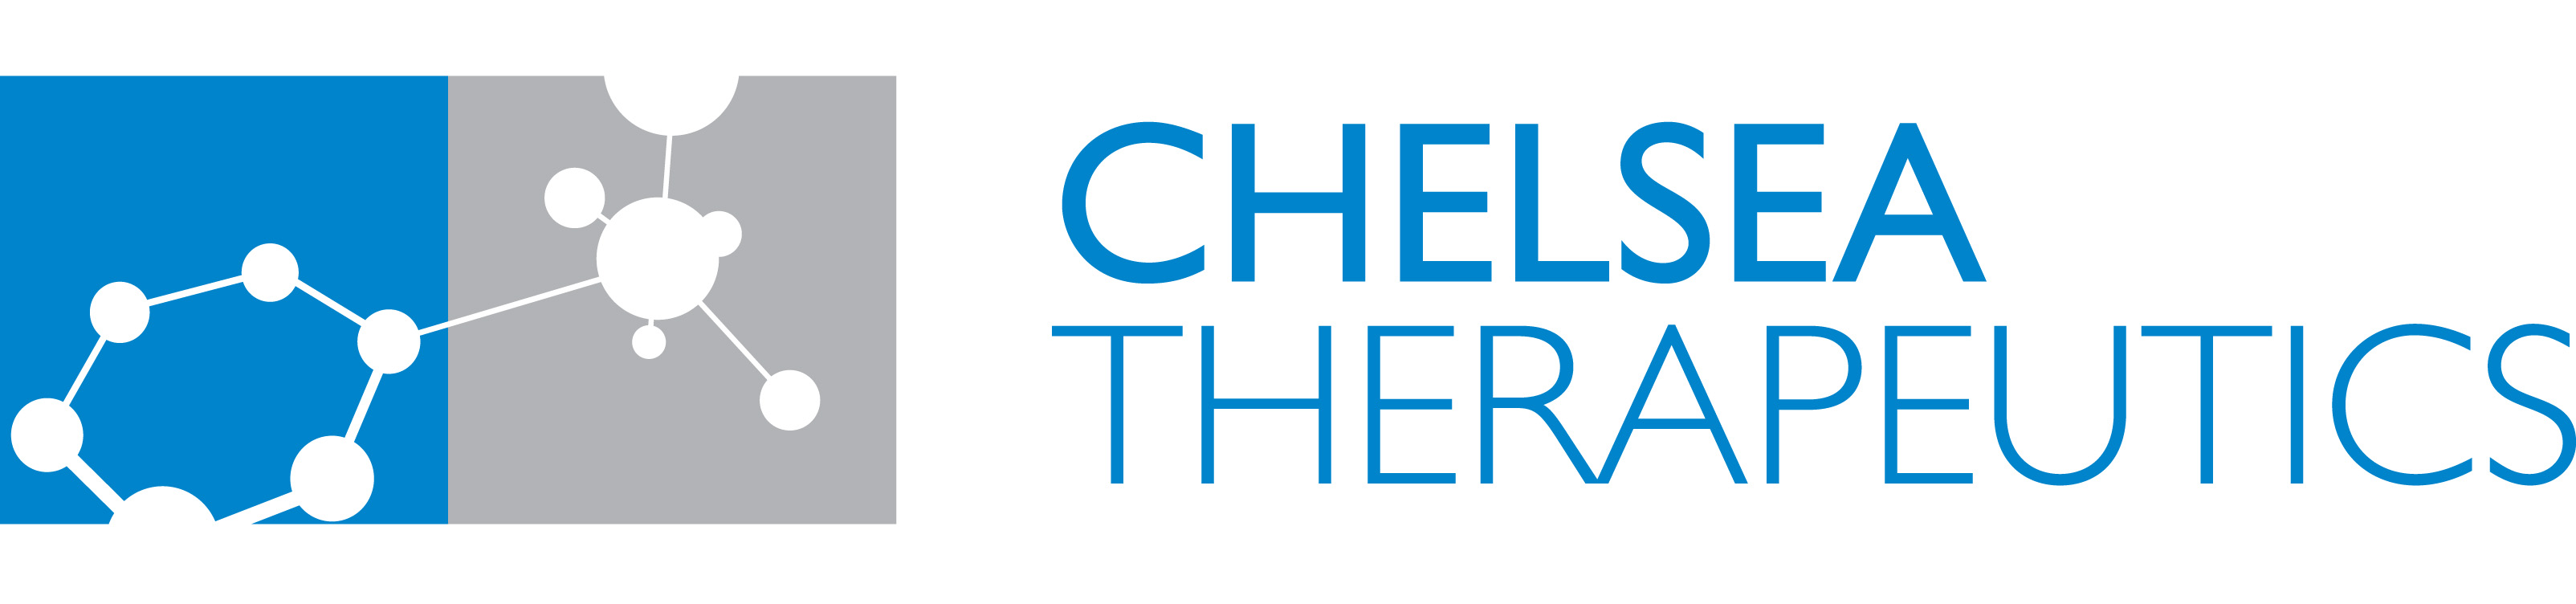 Chelsea Therapeutics Logo